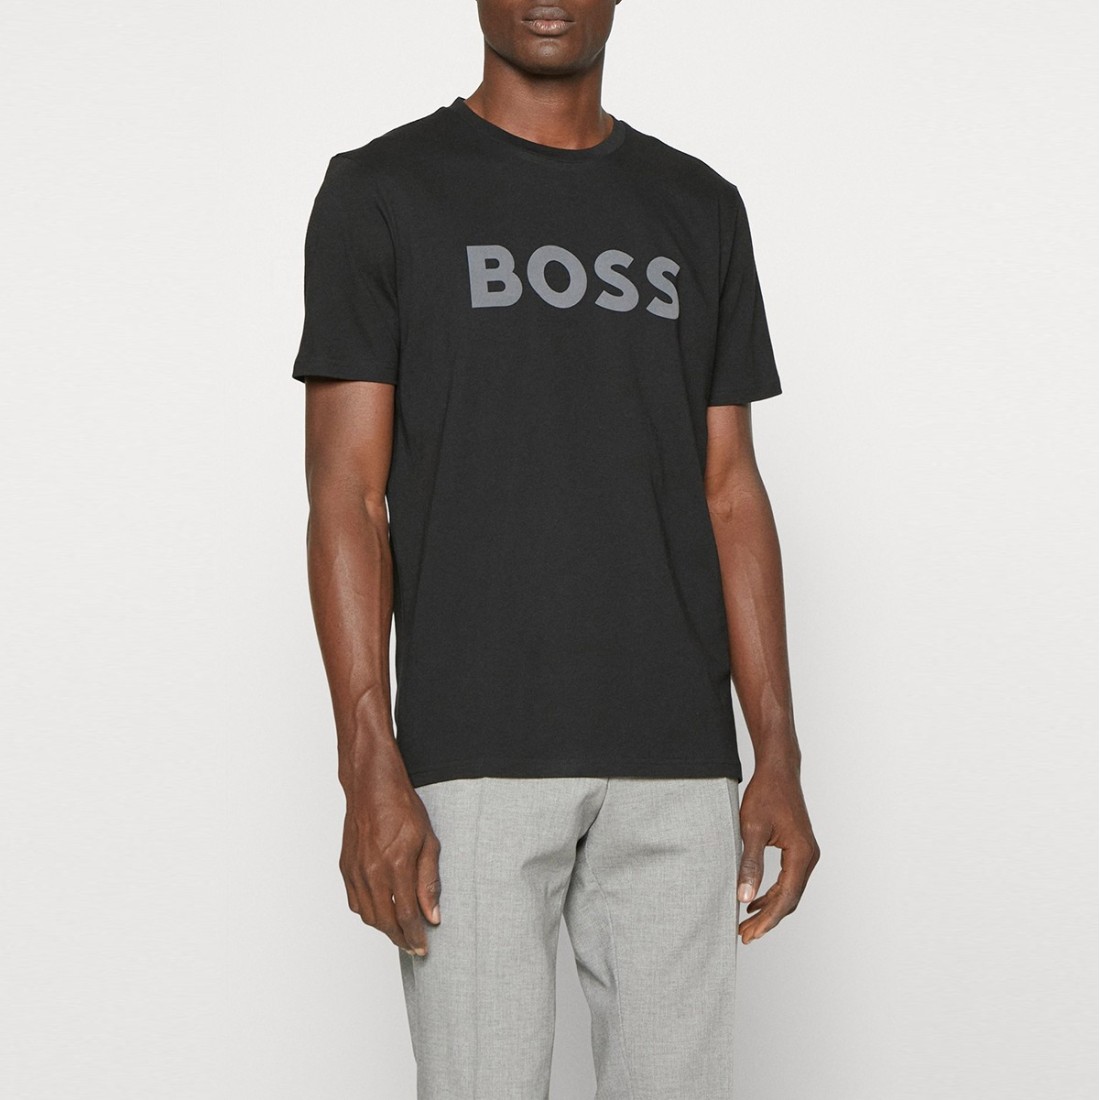 Image of BOSS - T-shirt Thinking - Colore: Nero,Taglia: S